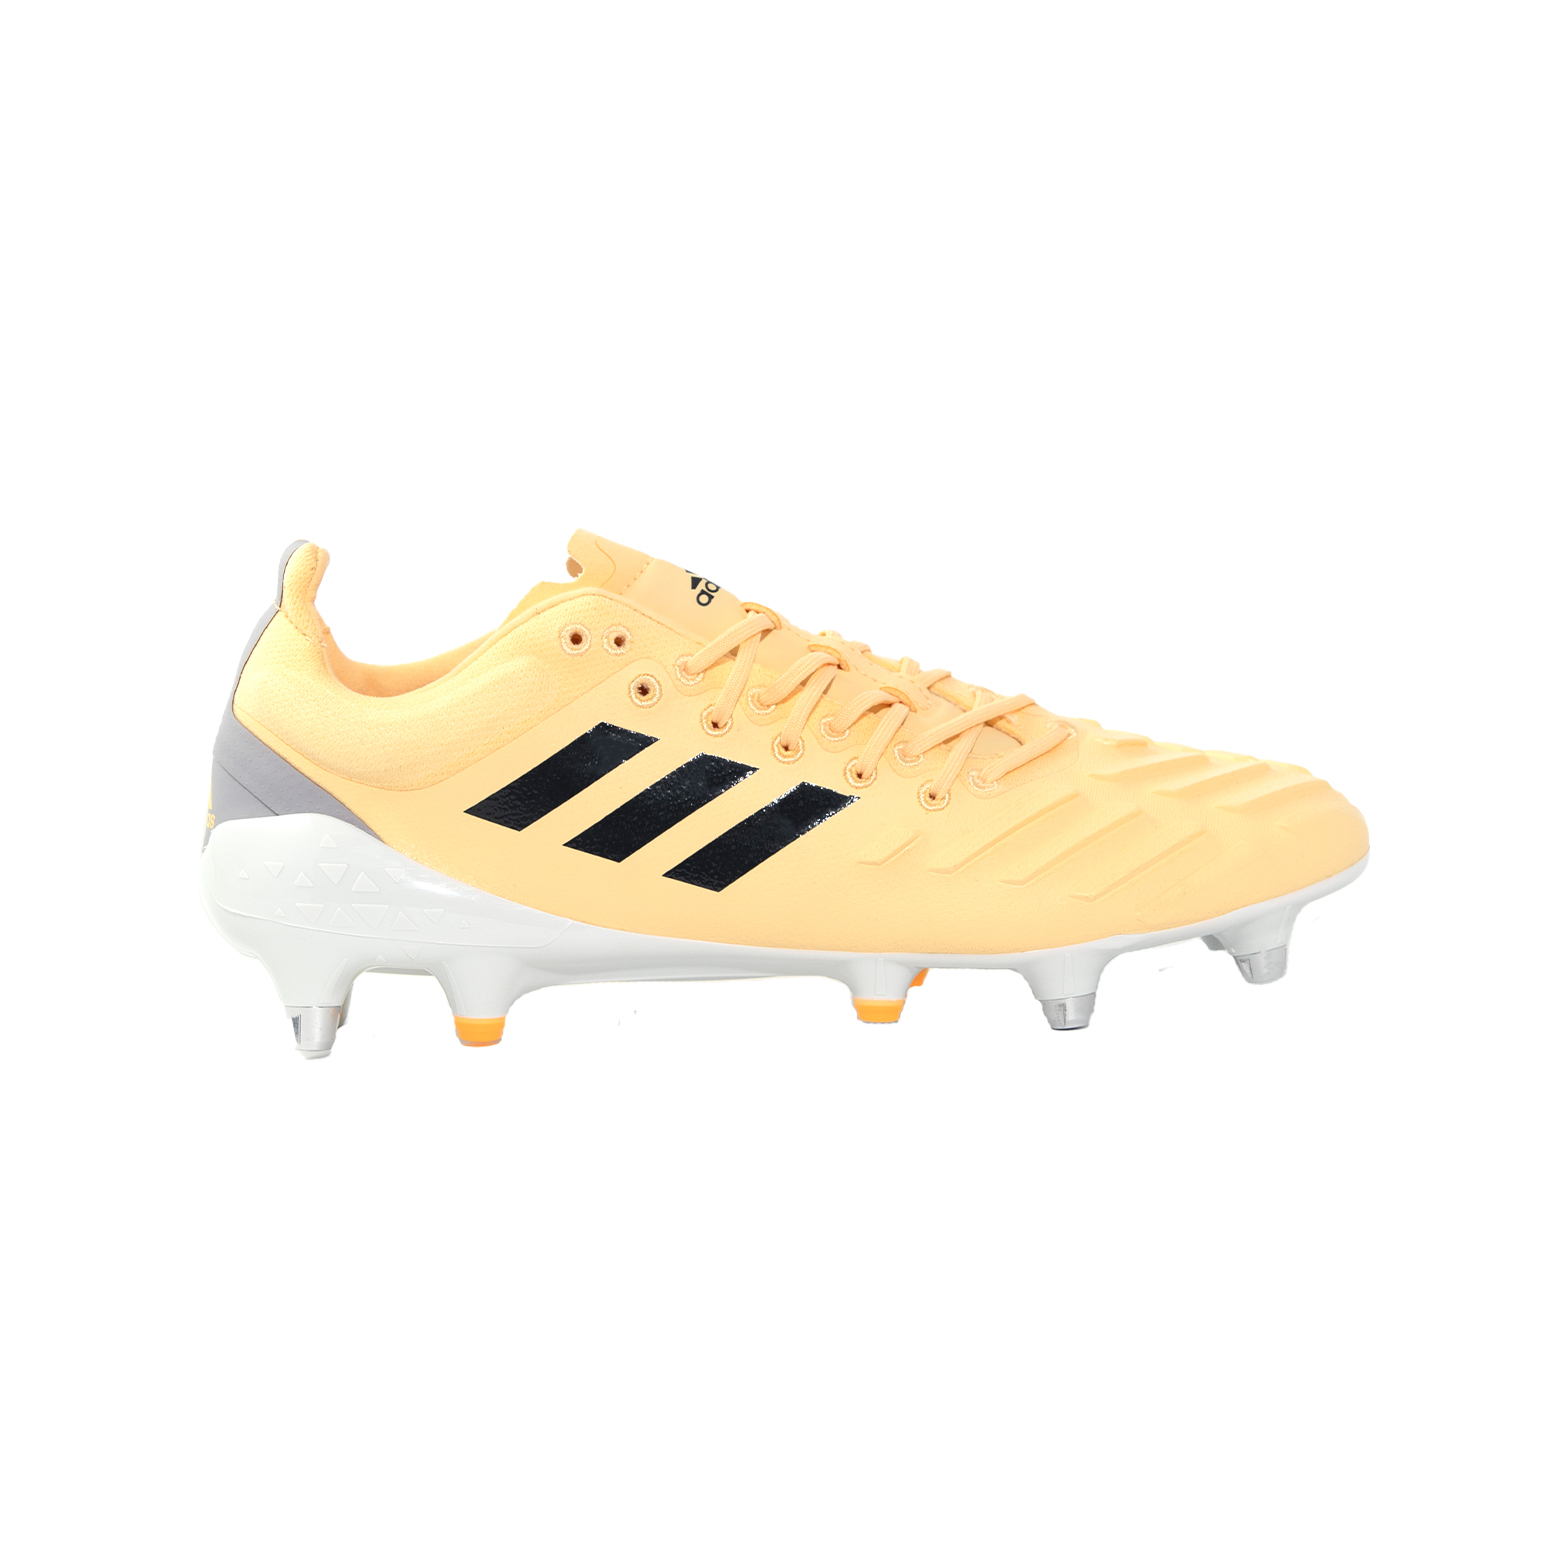 adidas Predator XP P (SG) Boots | Solar Gold | The Rugby Shop